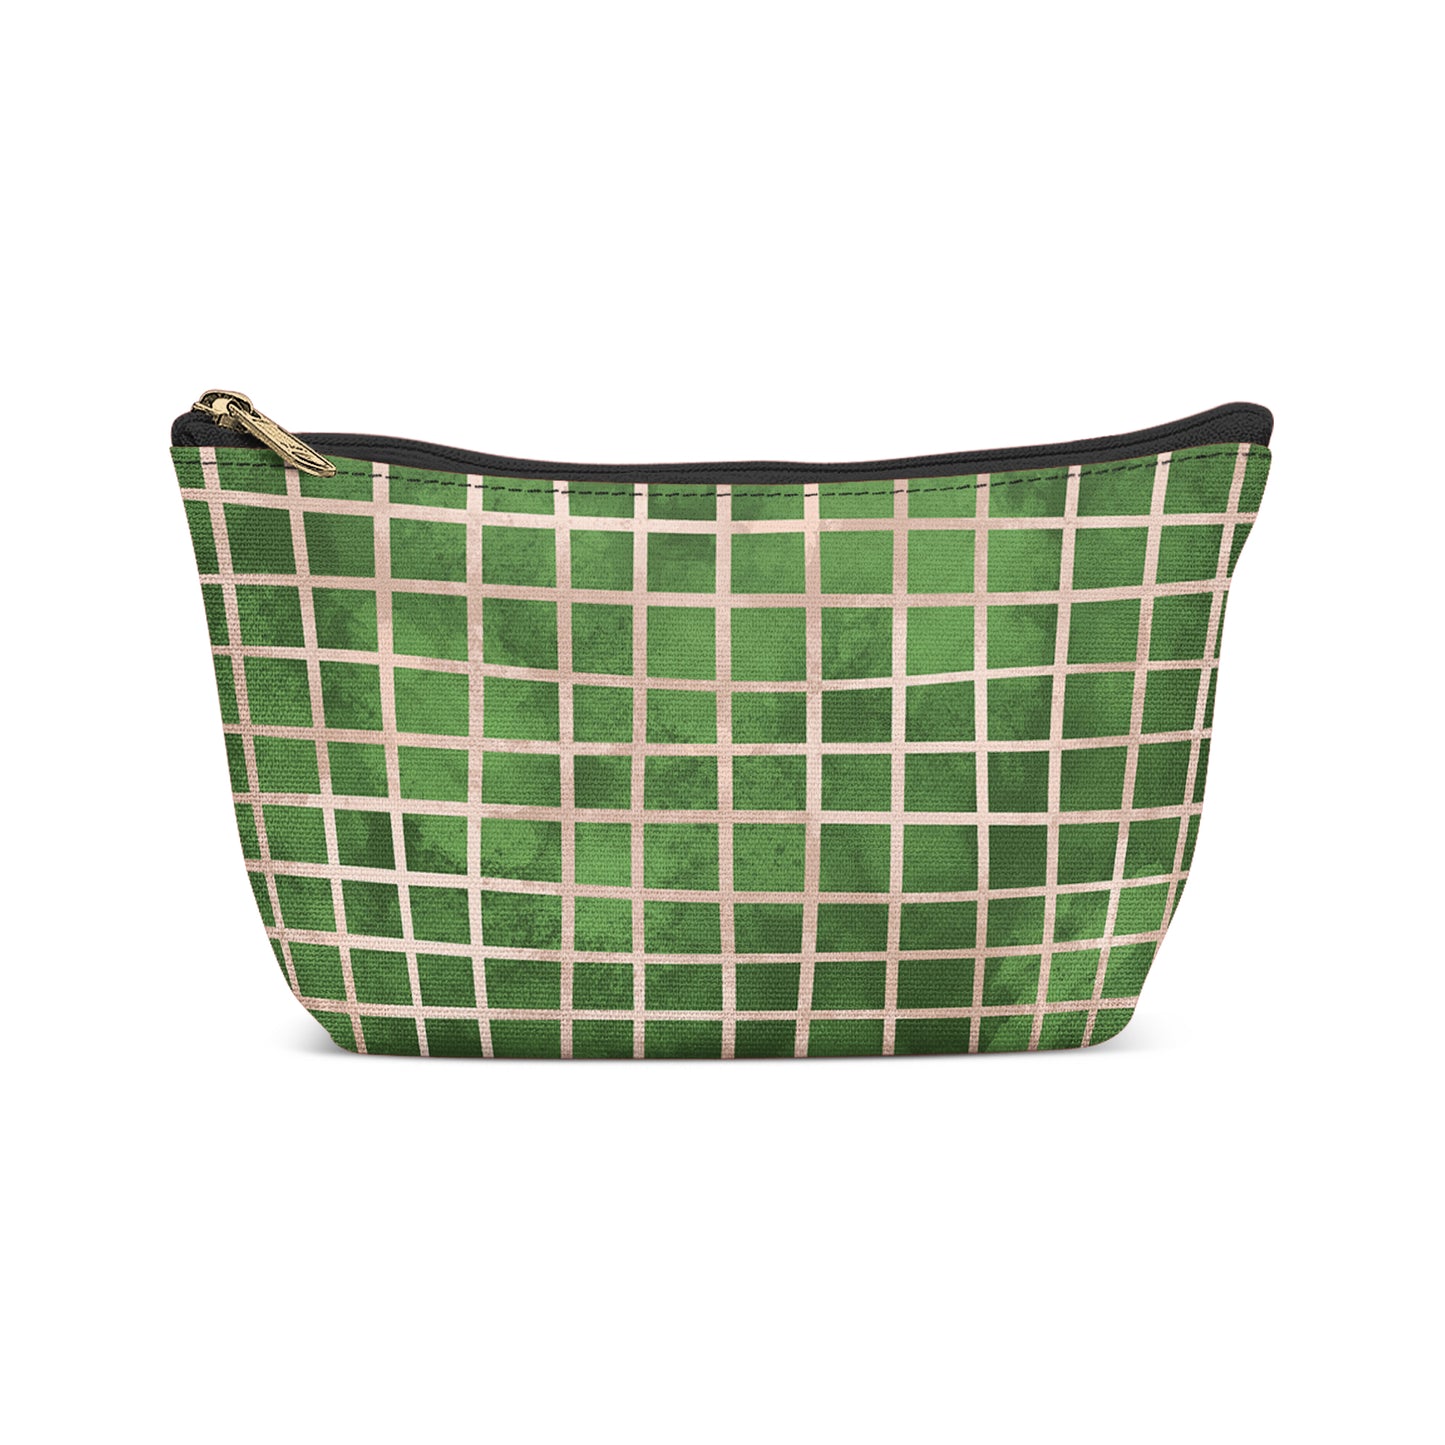 Green Checkered Art Make-up Bag